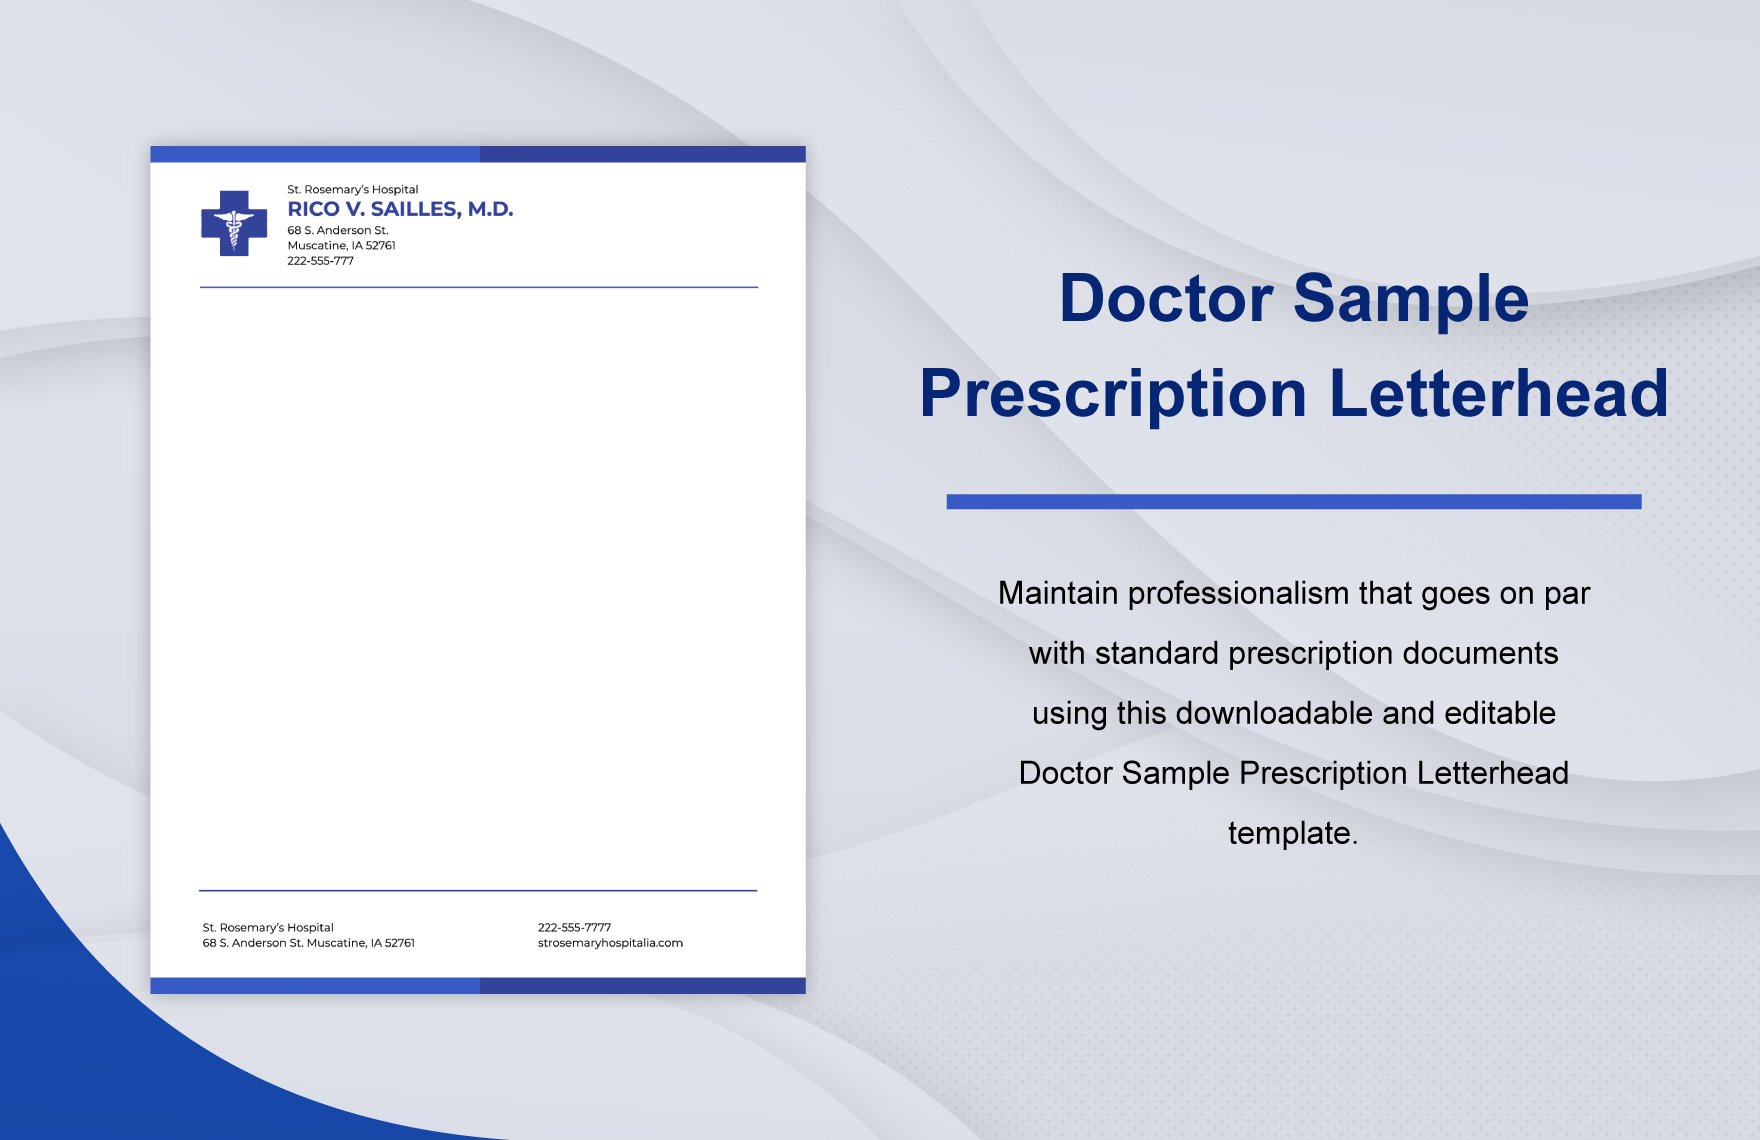 Doctor Sample Prescription Letterhead